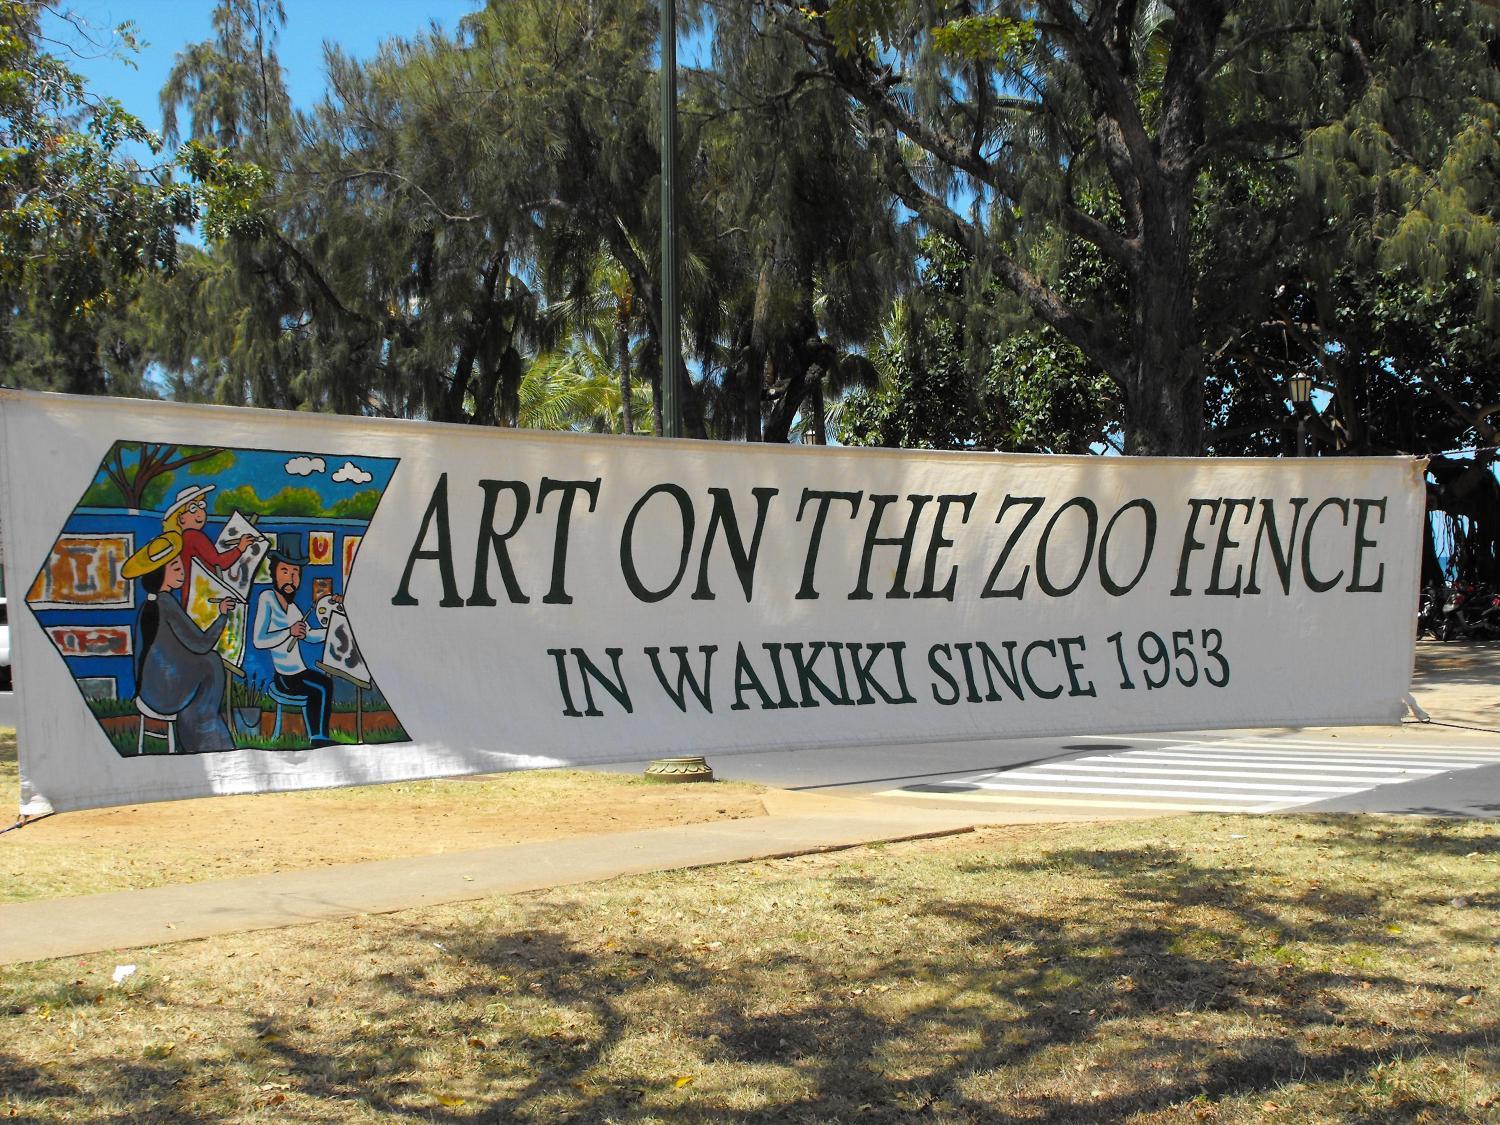 Art Show! Art on the Zoo Fence
Sat Dec 3, 9:00 AM - Sat Dec 3, 7:00 PM
in 29 days